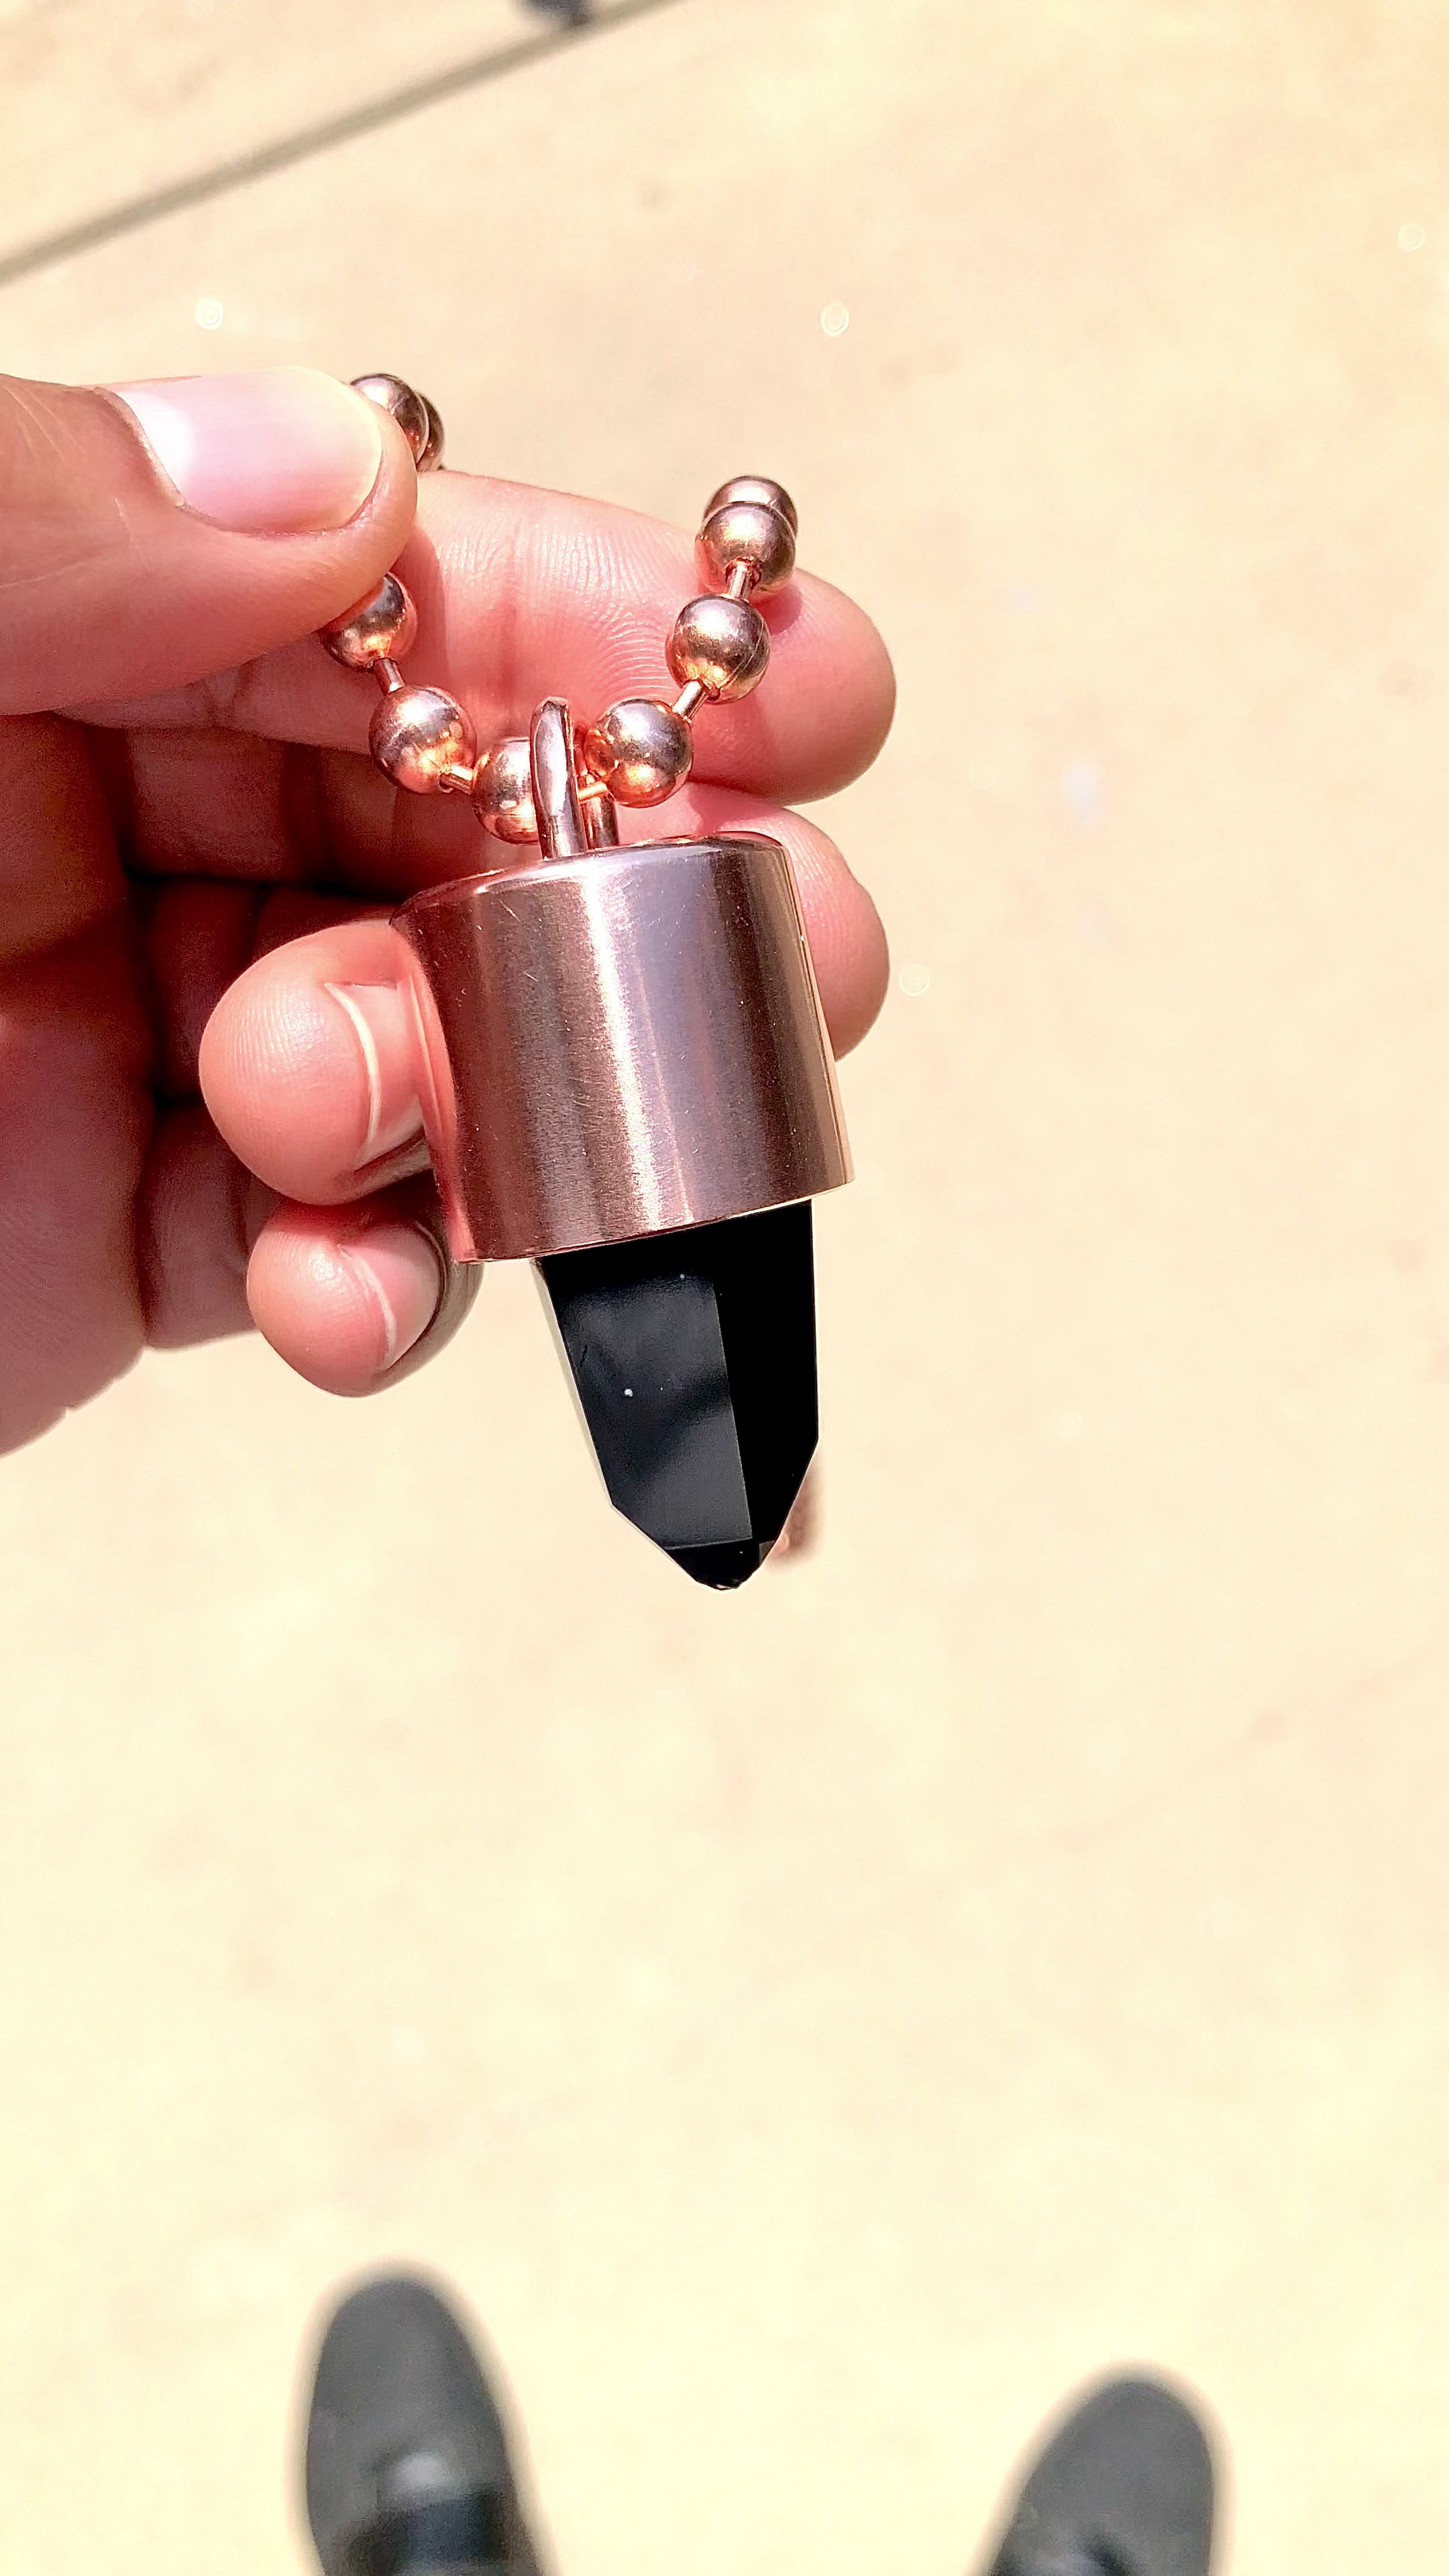 Black Obsidian Crystal Key Necklace